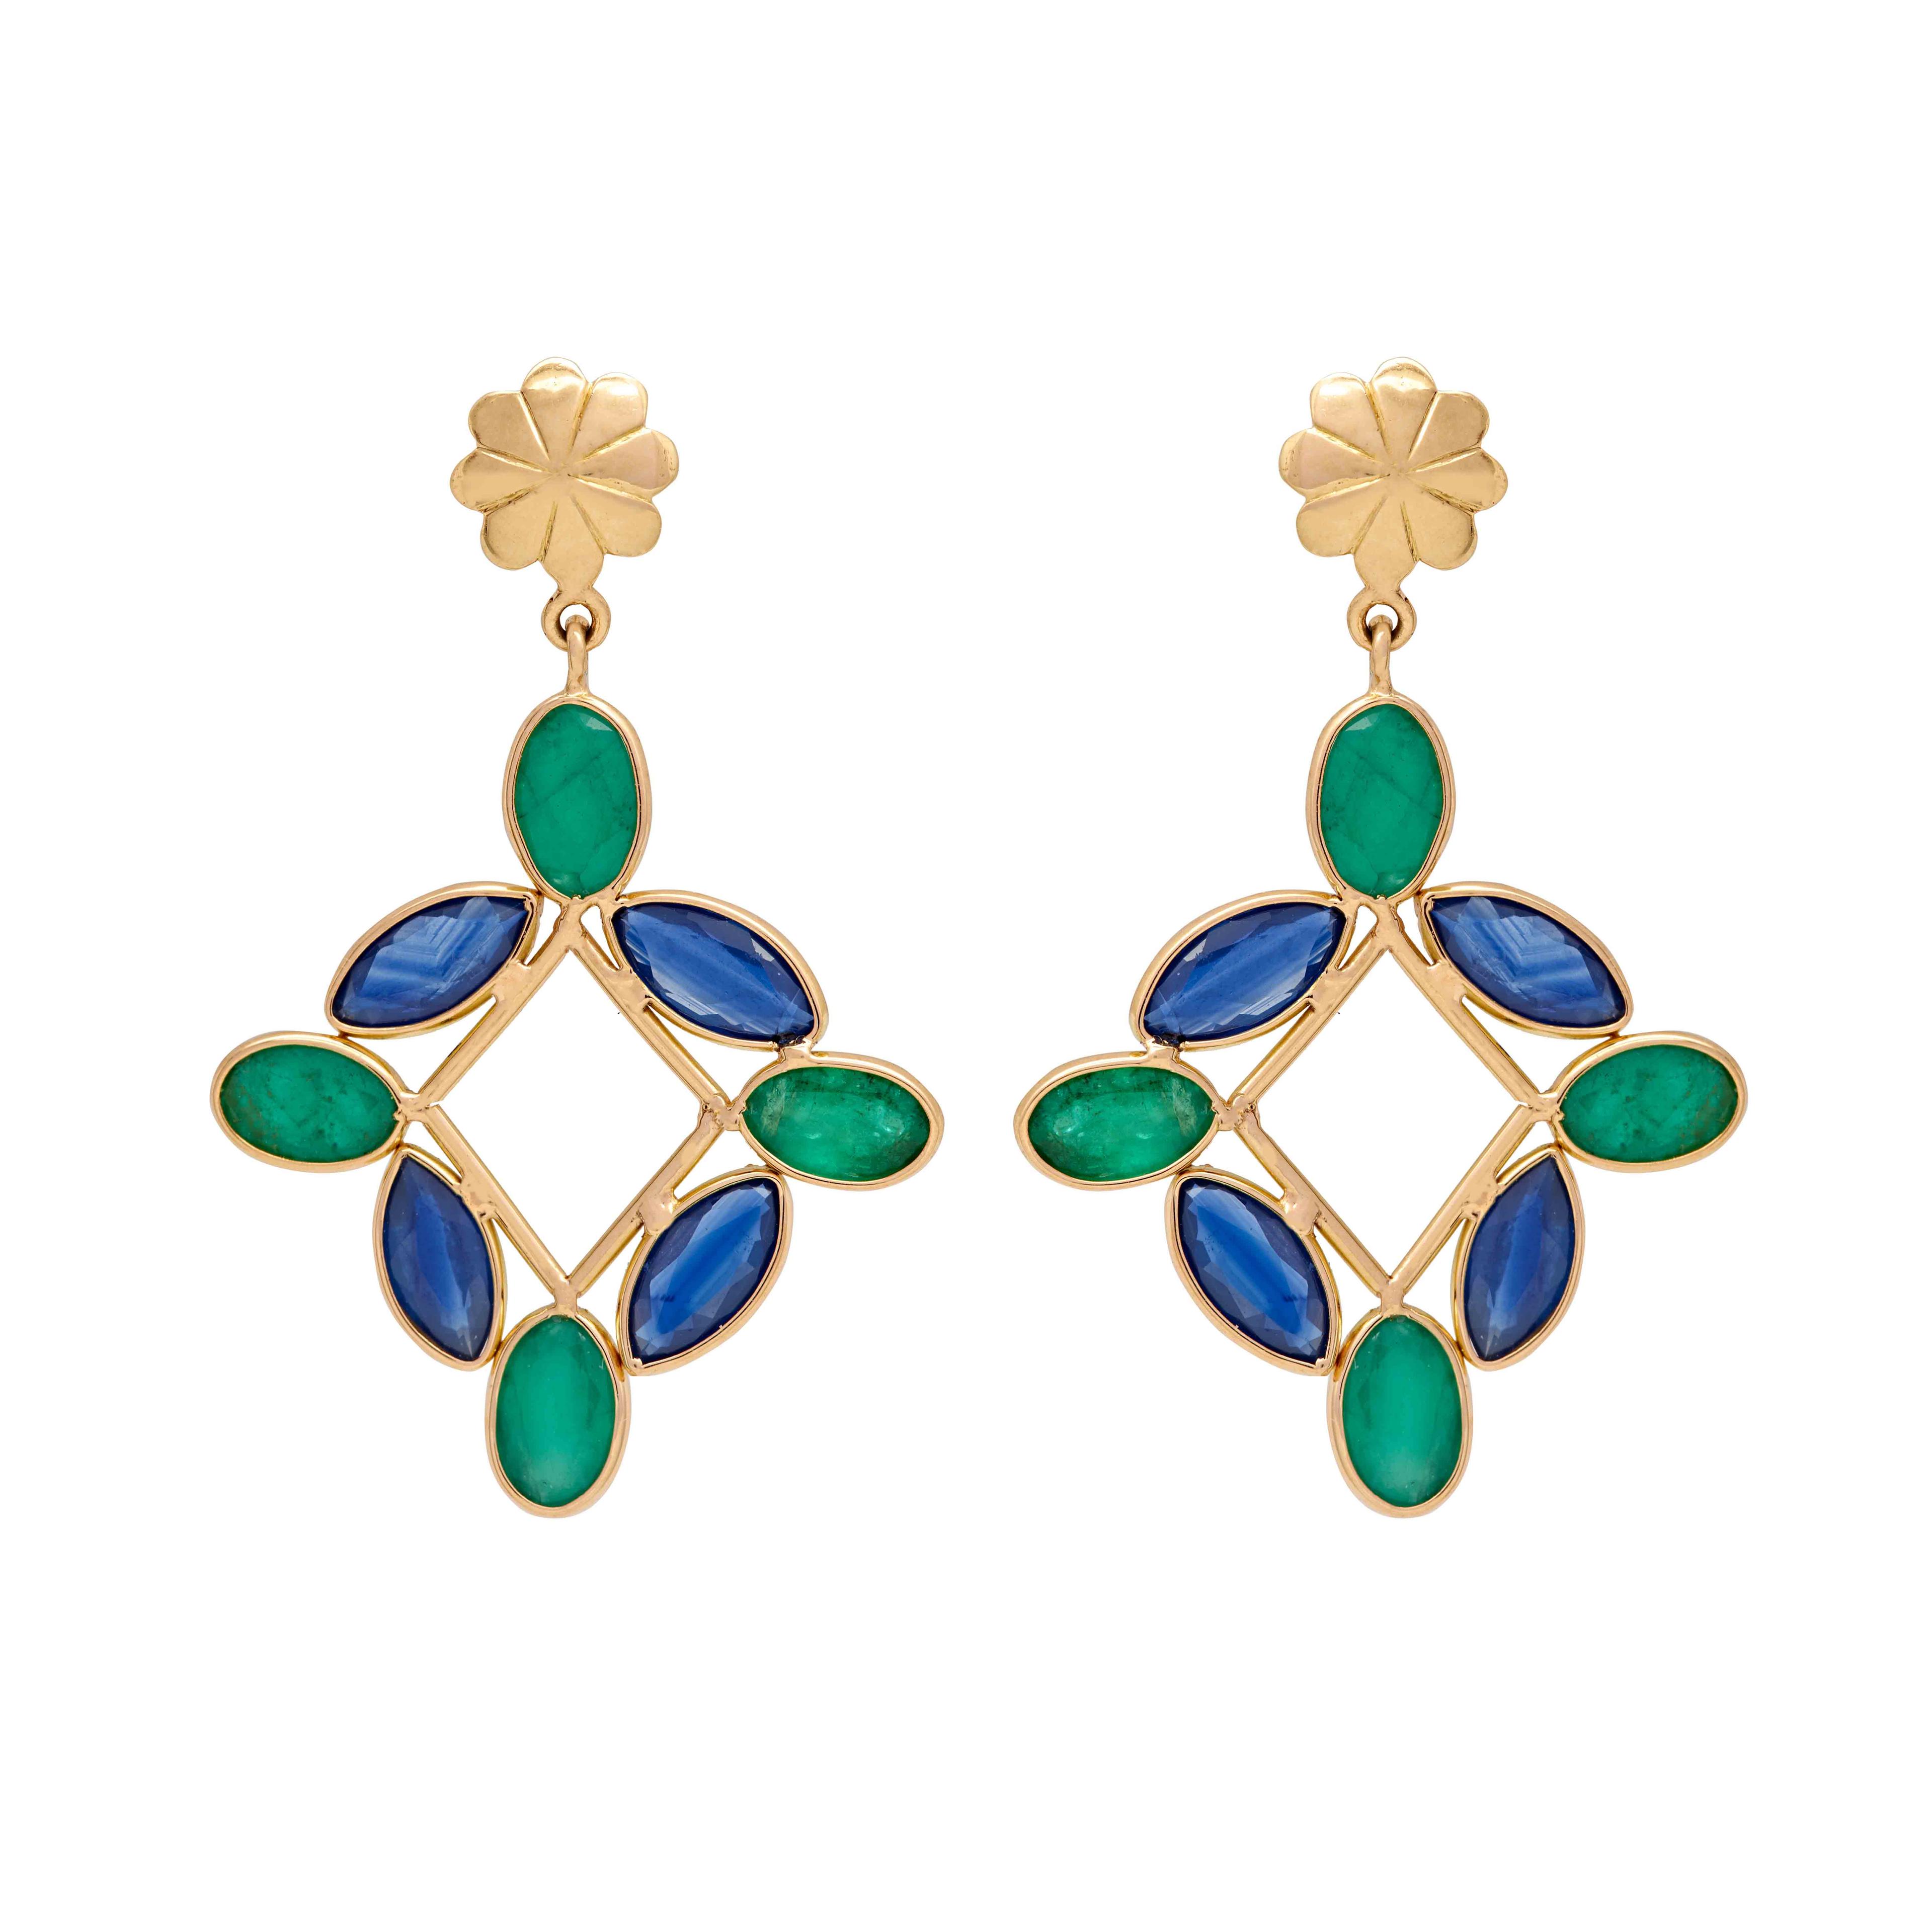 18K Yellow Gold Gold Blue Sapphire,Emerald Earrings for women